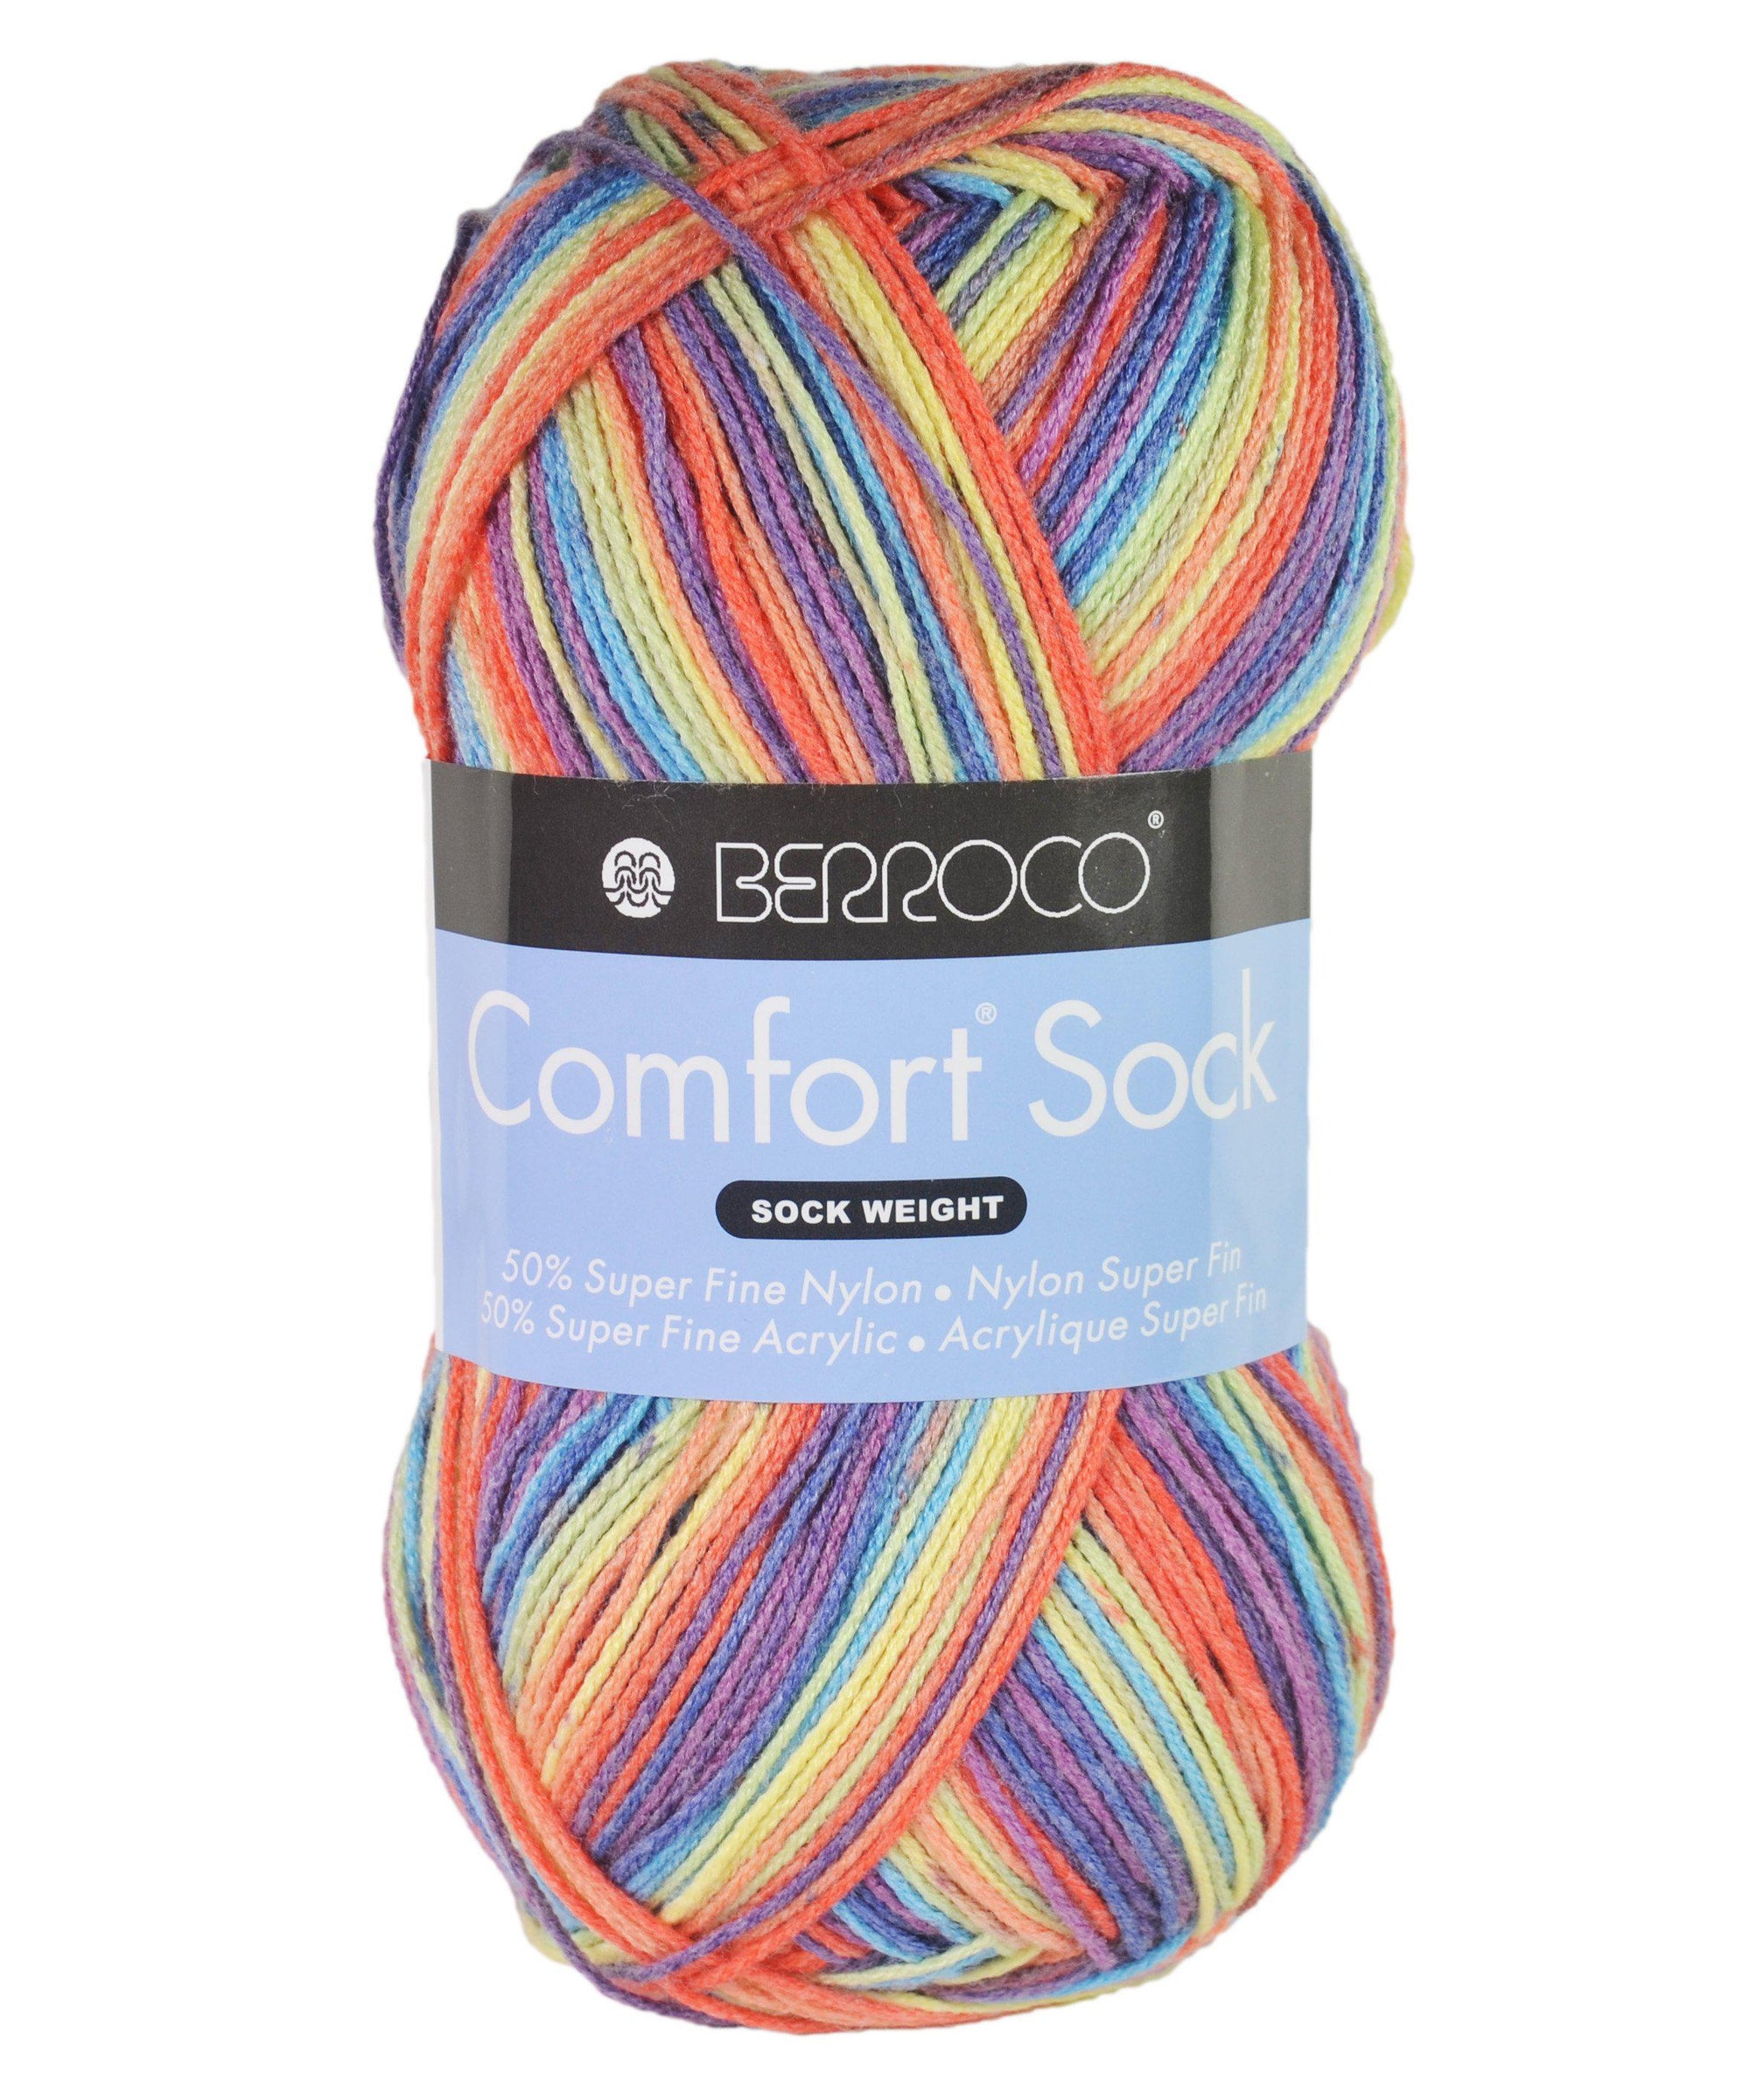 Berroco Comfort Sock Yarn